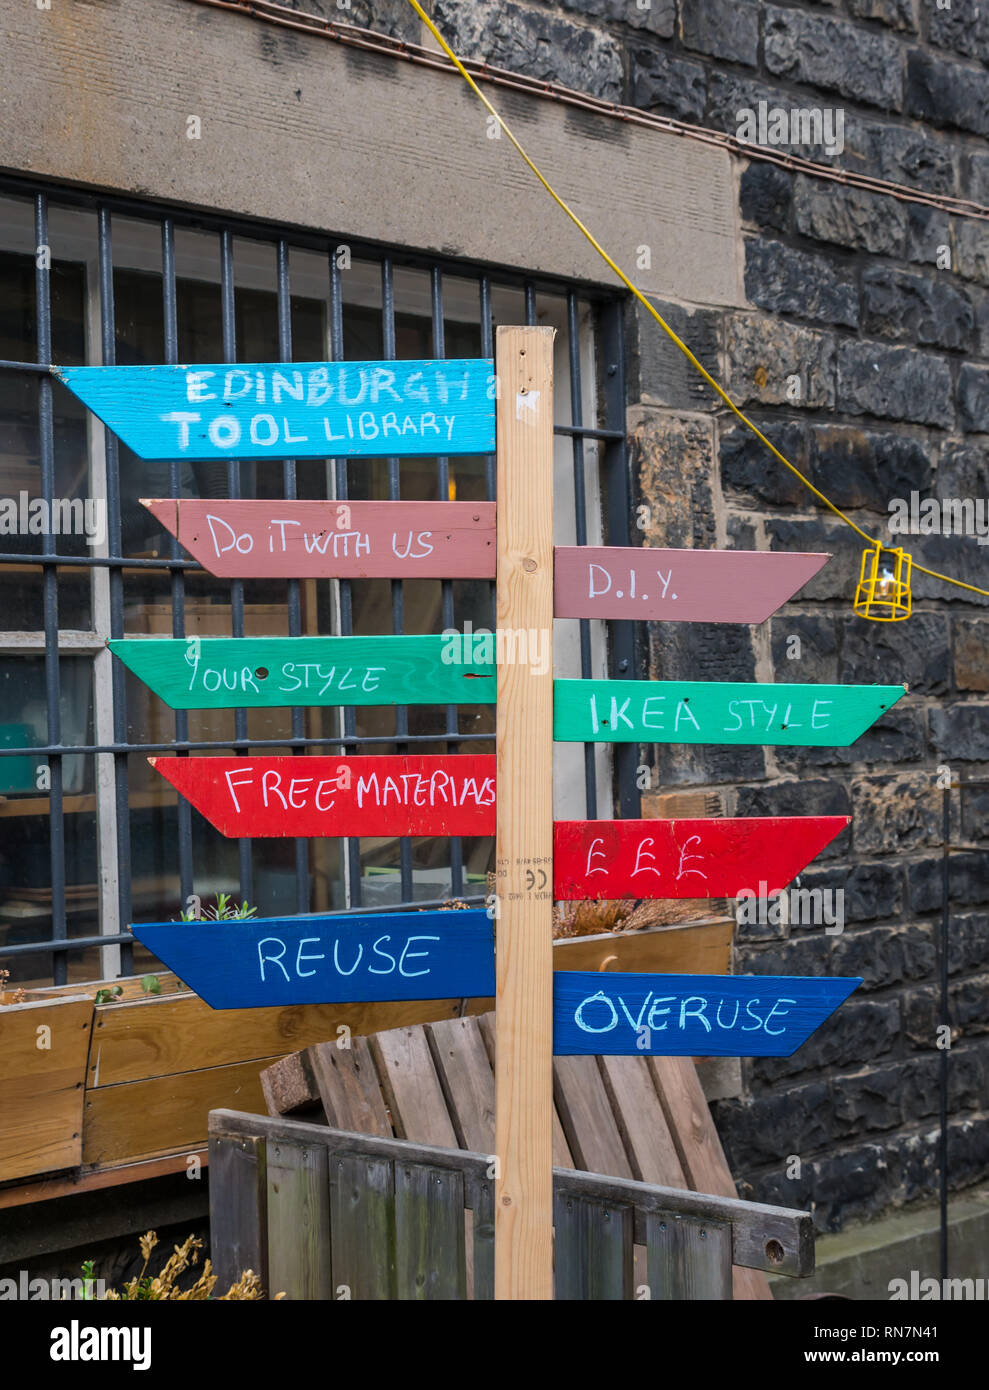 Quirky joke wooden signpost, Edinburgh tool library, Lieth Custom House, Edinburgh, Scotland, UK Stock Photo